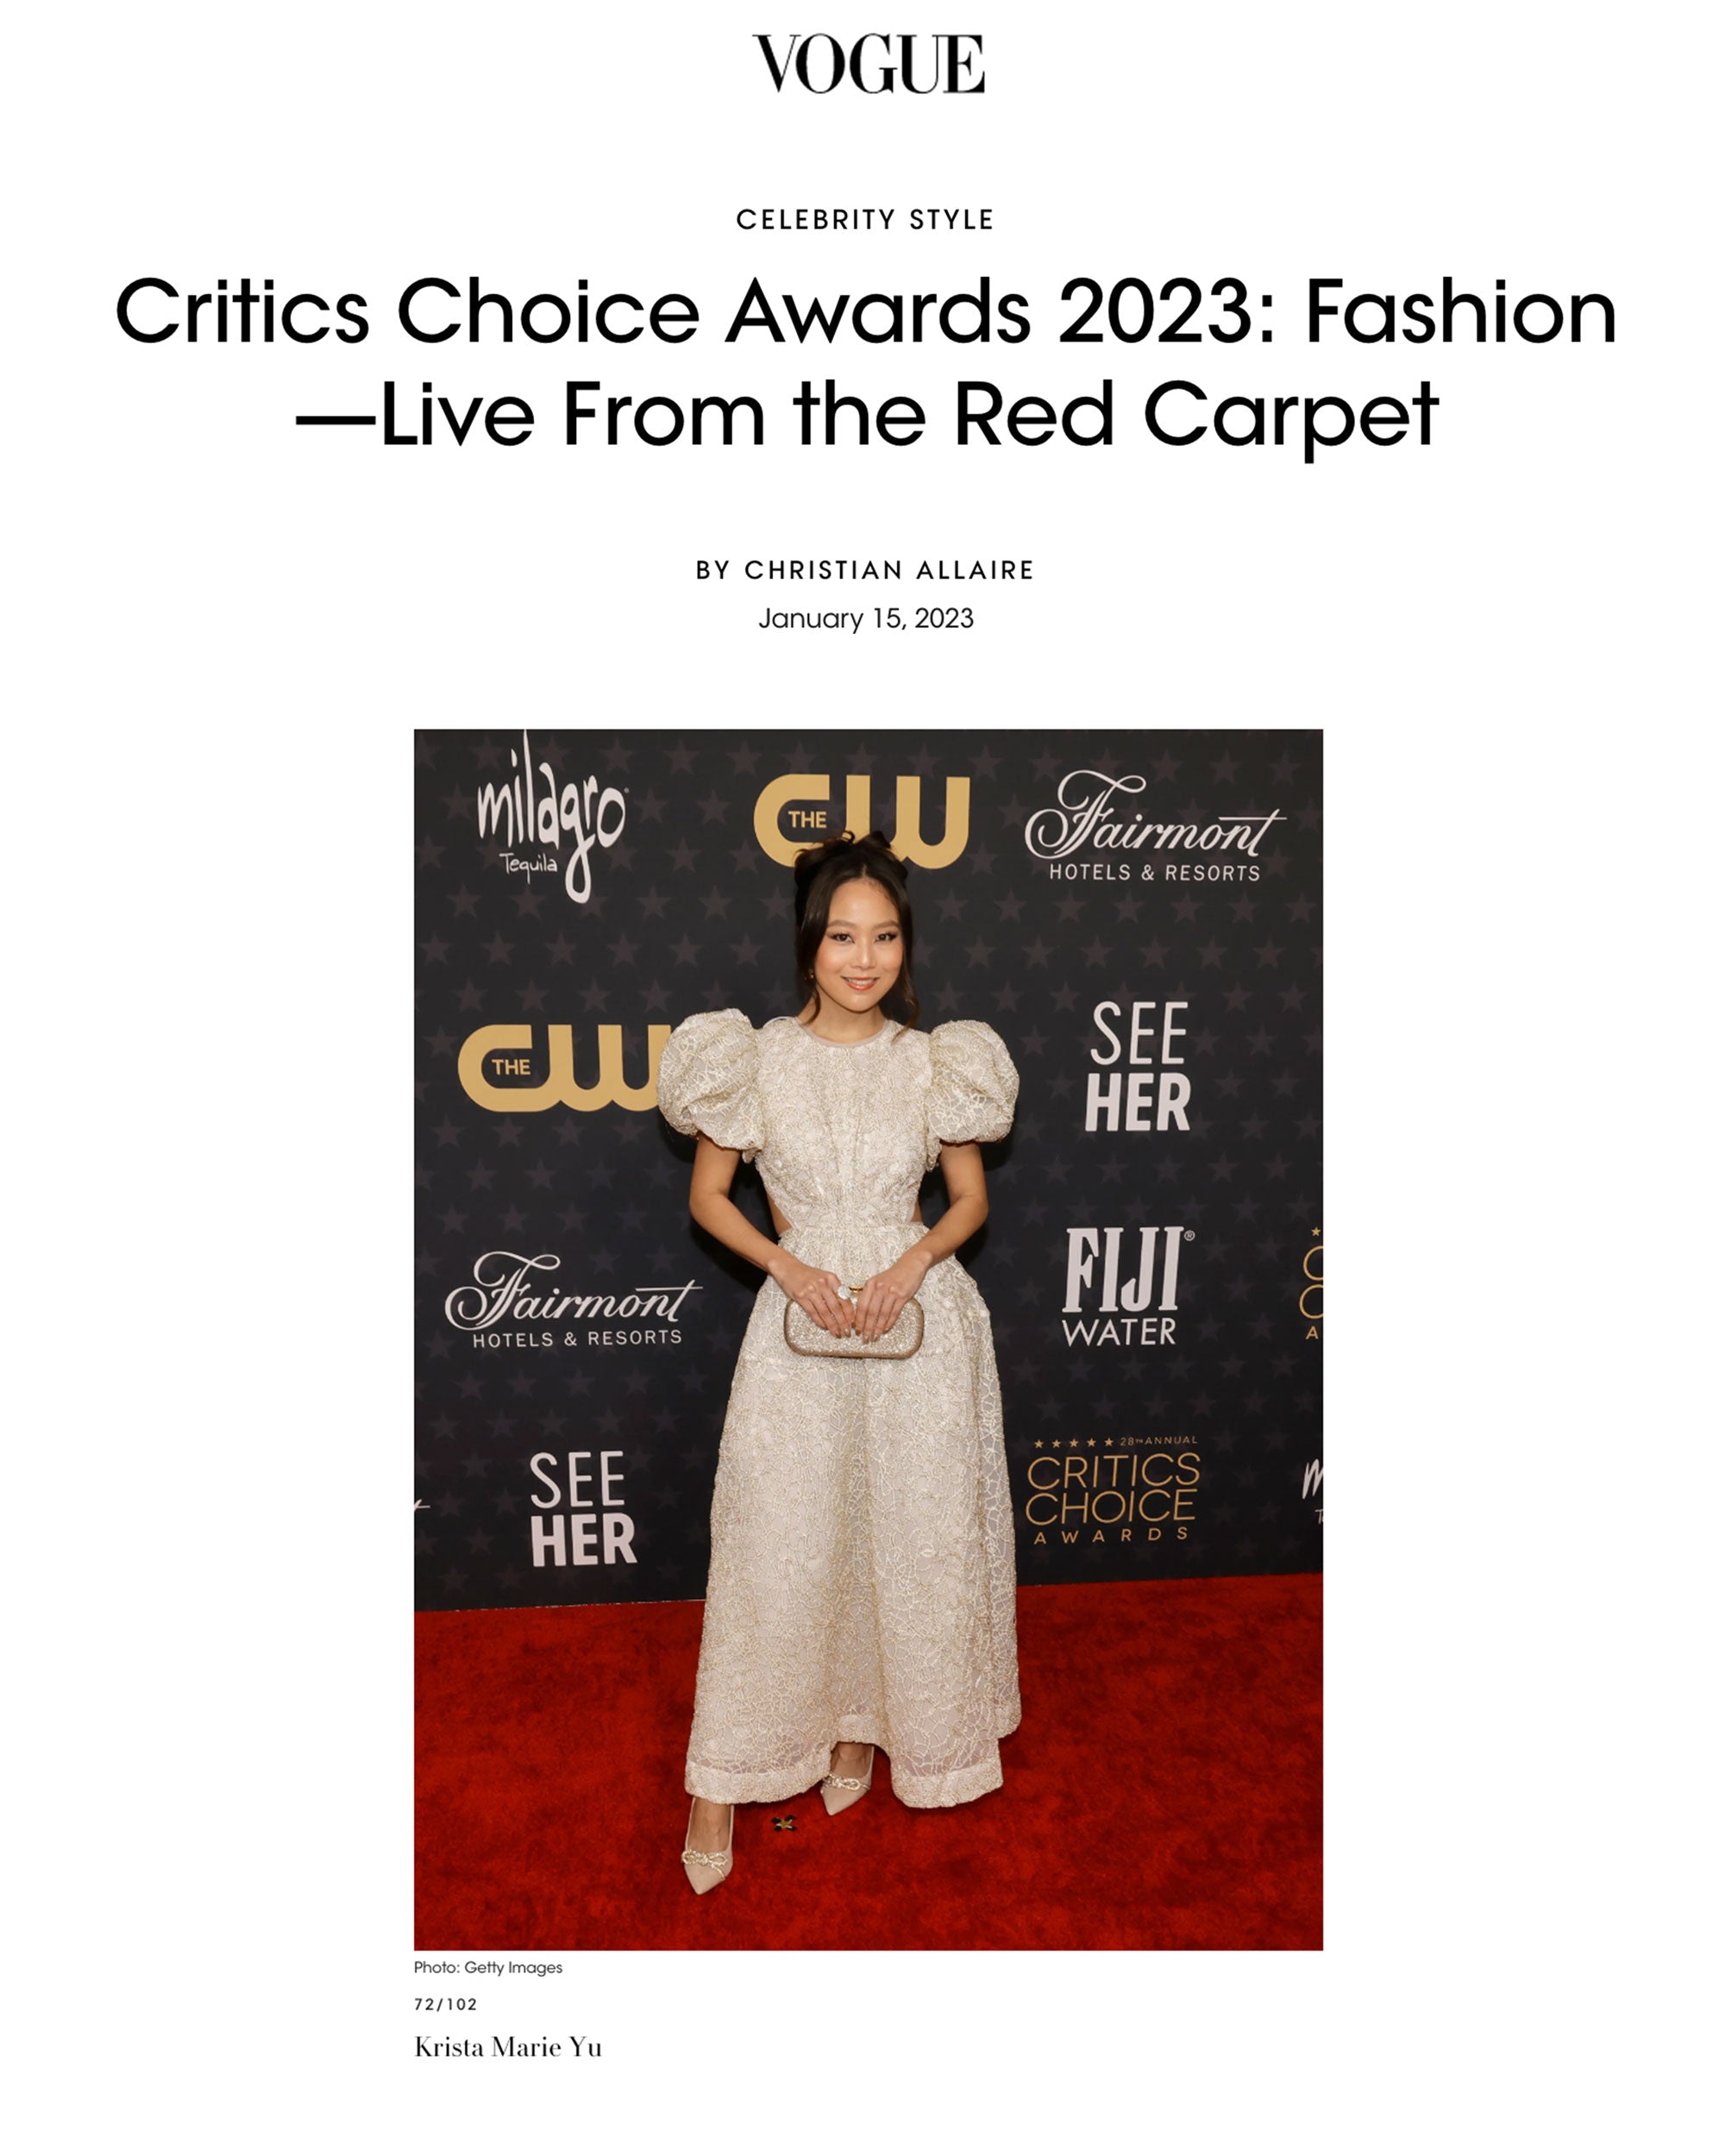 VOGUE: Critics Choice Awards 2023